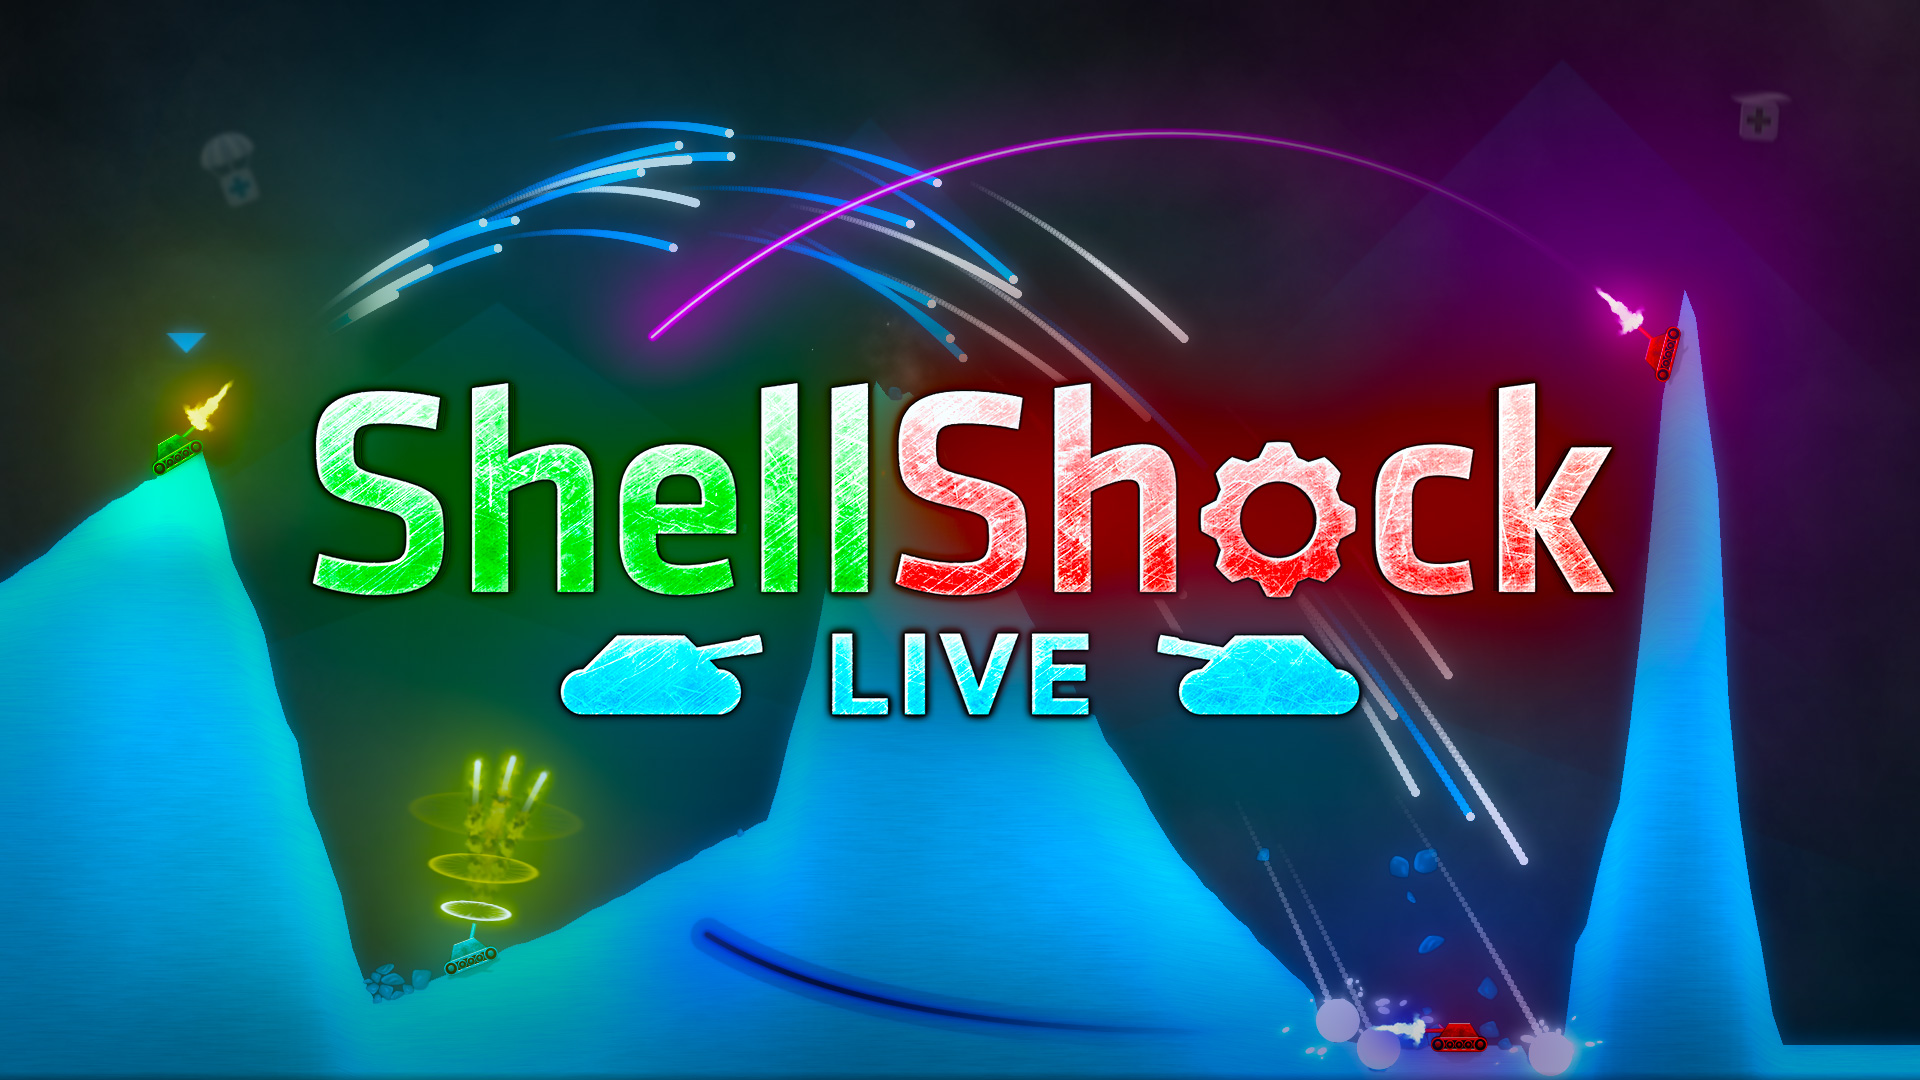 Shellshock Live Kostenlos Downloaden